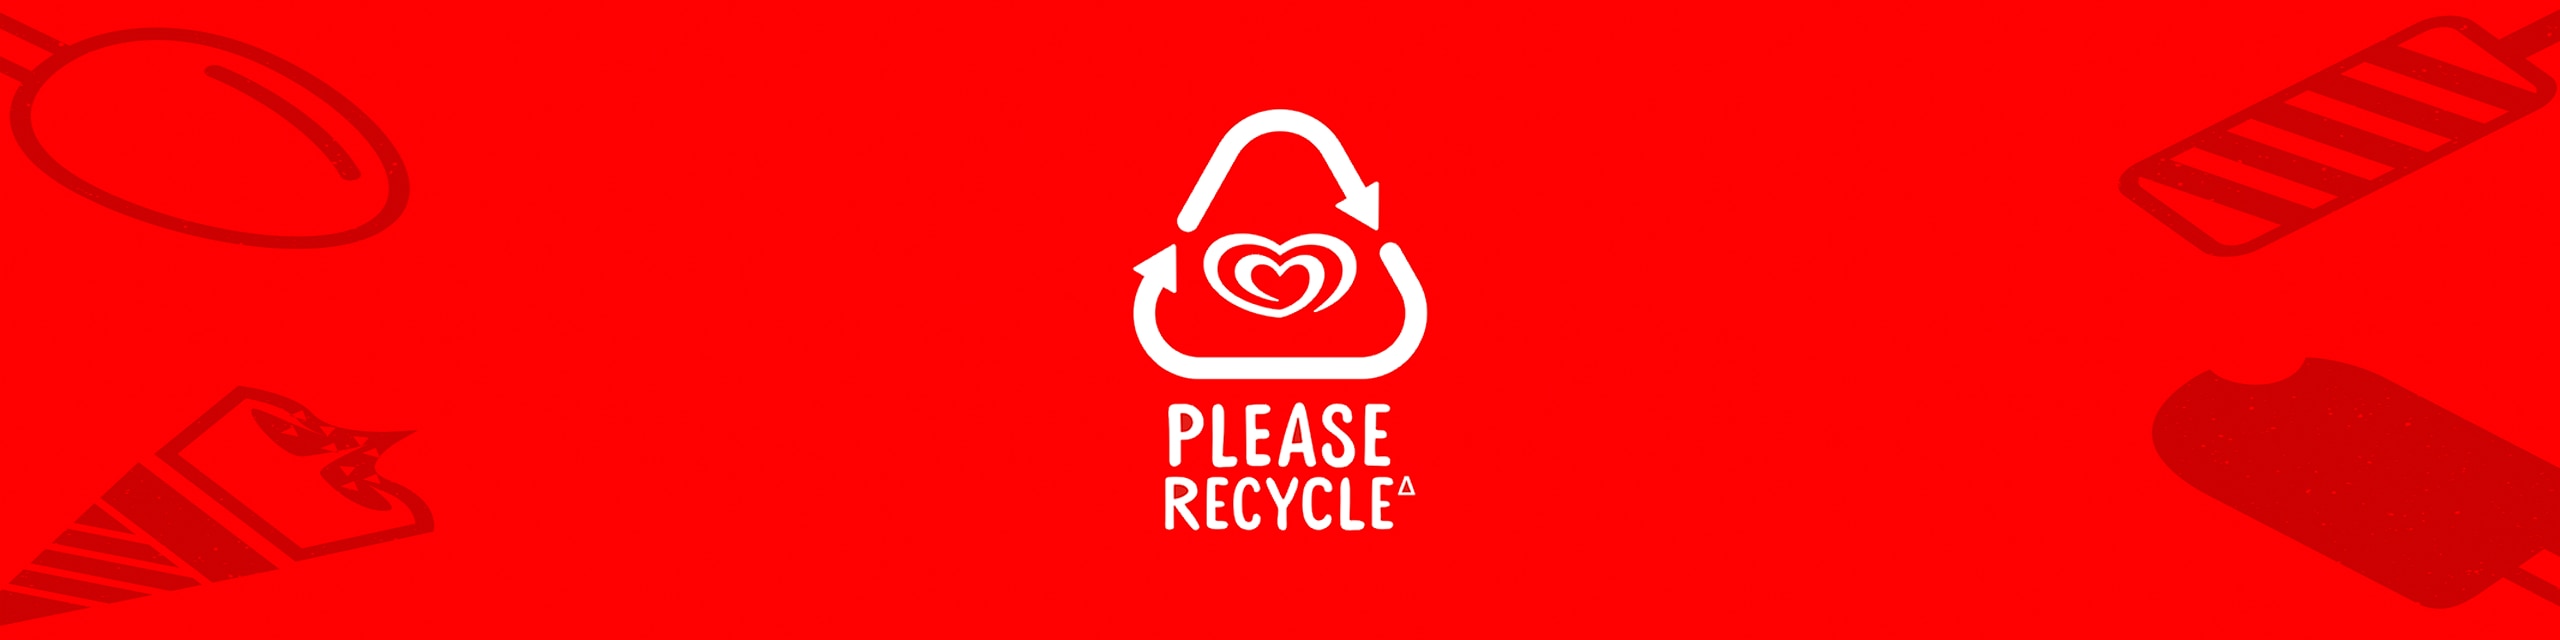 Please recycle logo